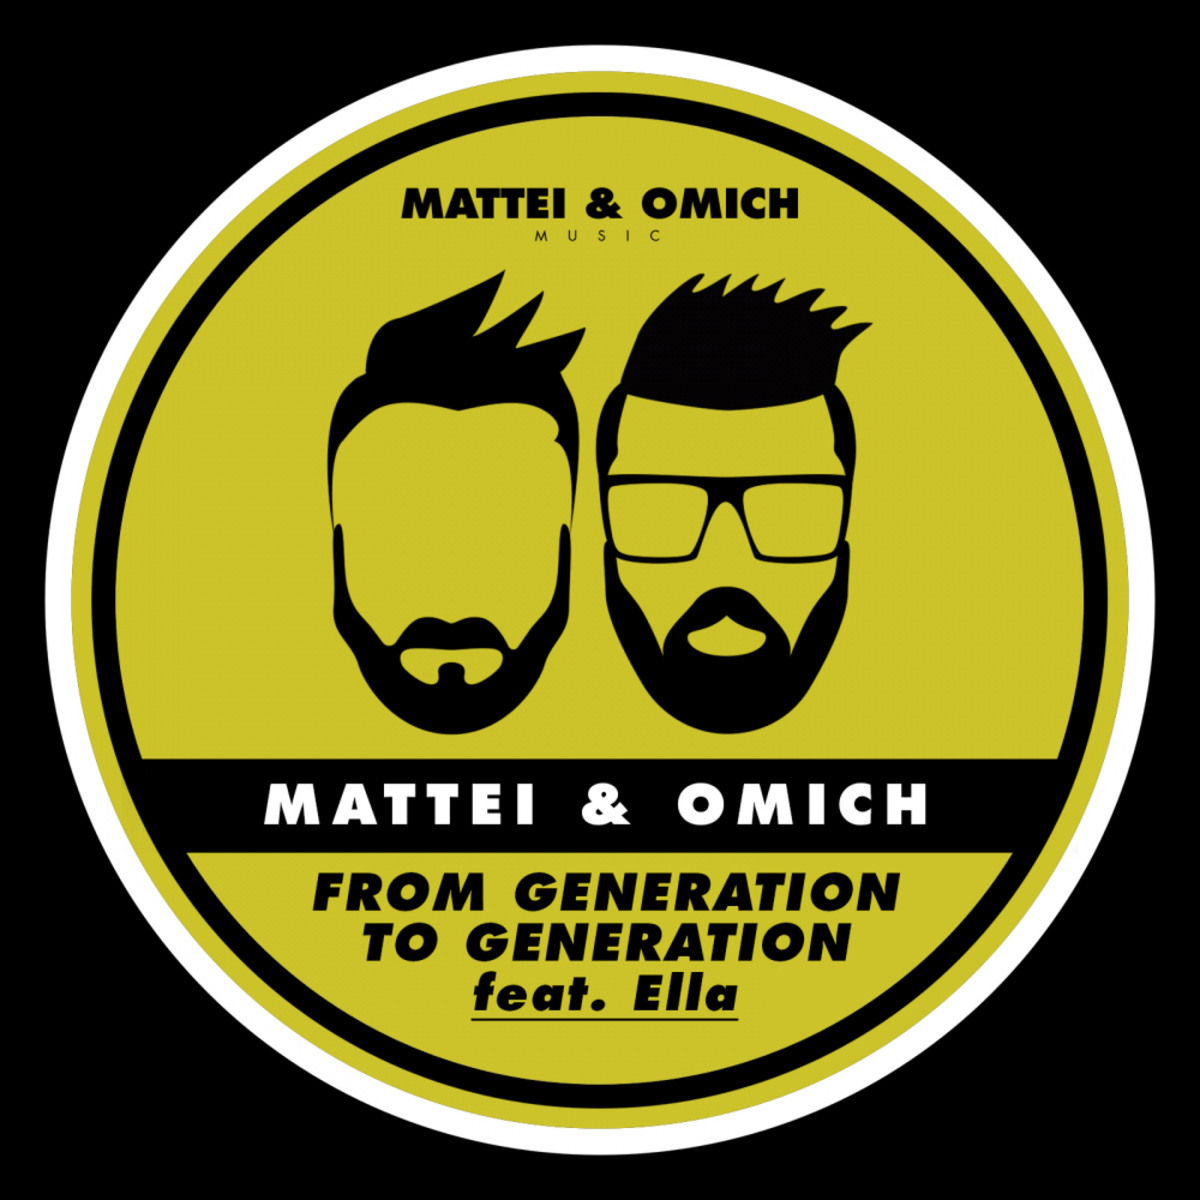 Mattei & Omich - From Generation To Generation / Mattei & Omich Music